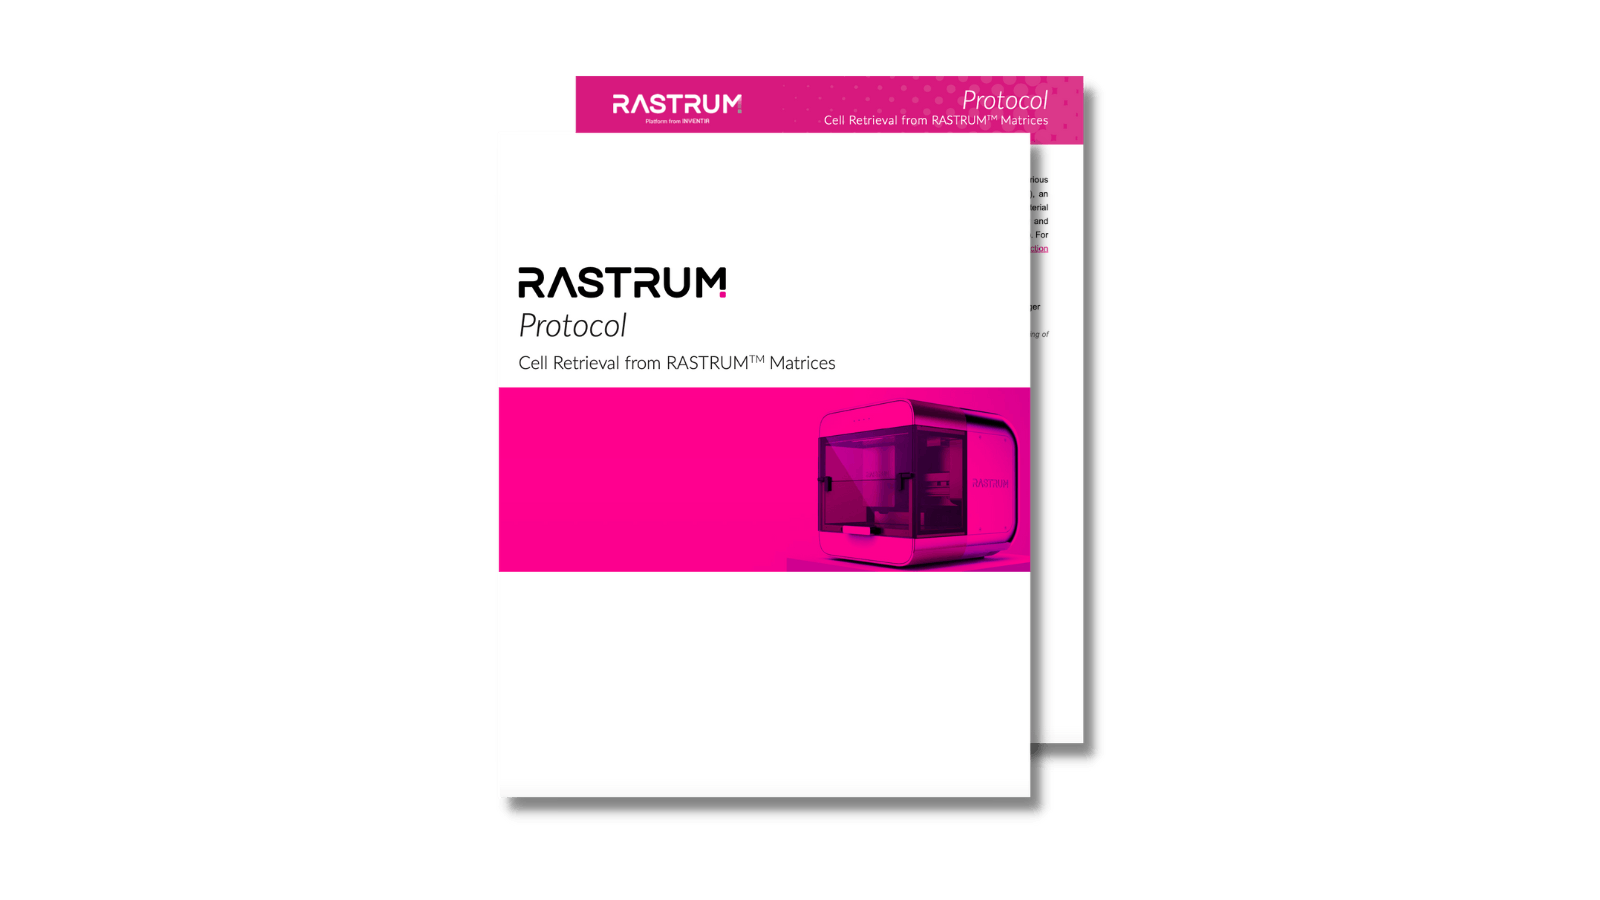 Cell retrieval from RASTRUM™ Matrices